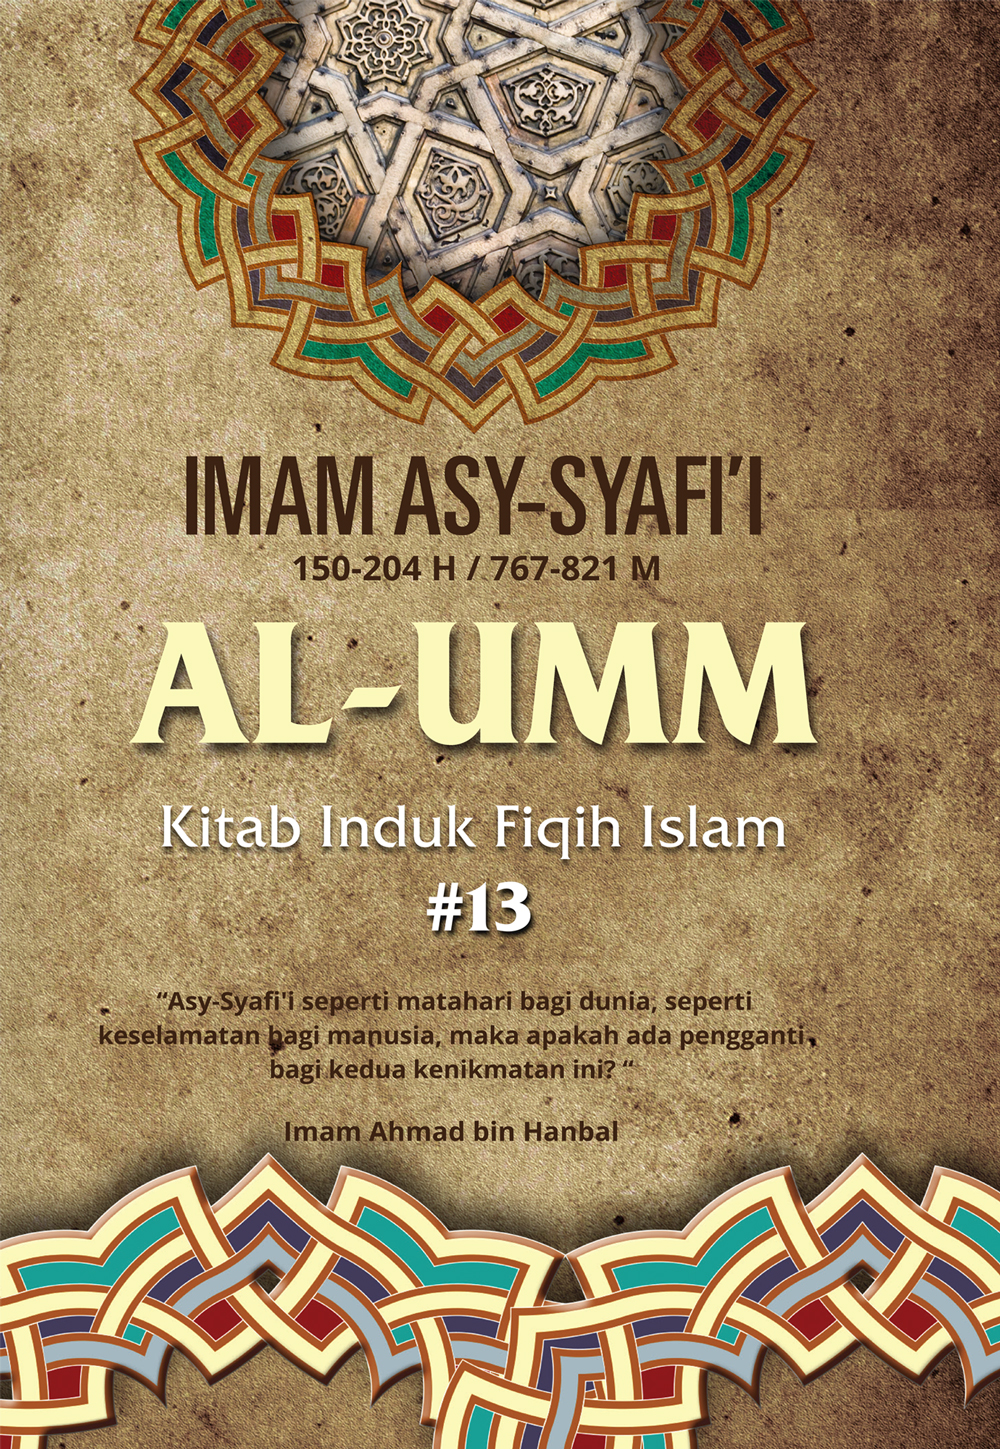 Buku Referensi Agama karya Imam asy Syafi’i-al-Umm #13: Kitab Induk Fiqih Islam Mazhab Syafi’i